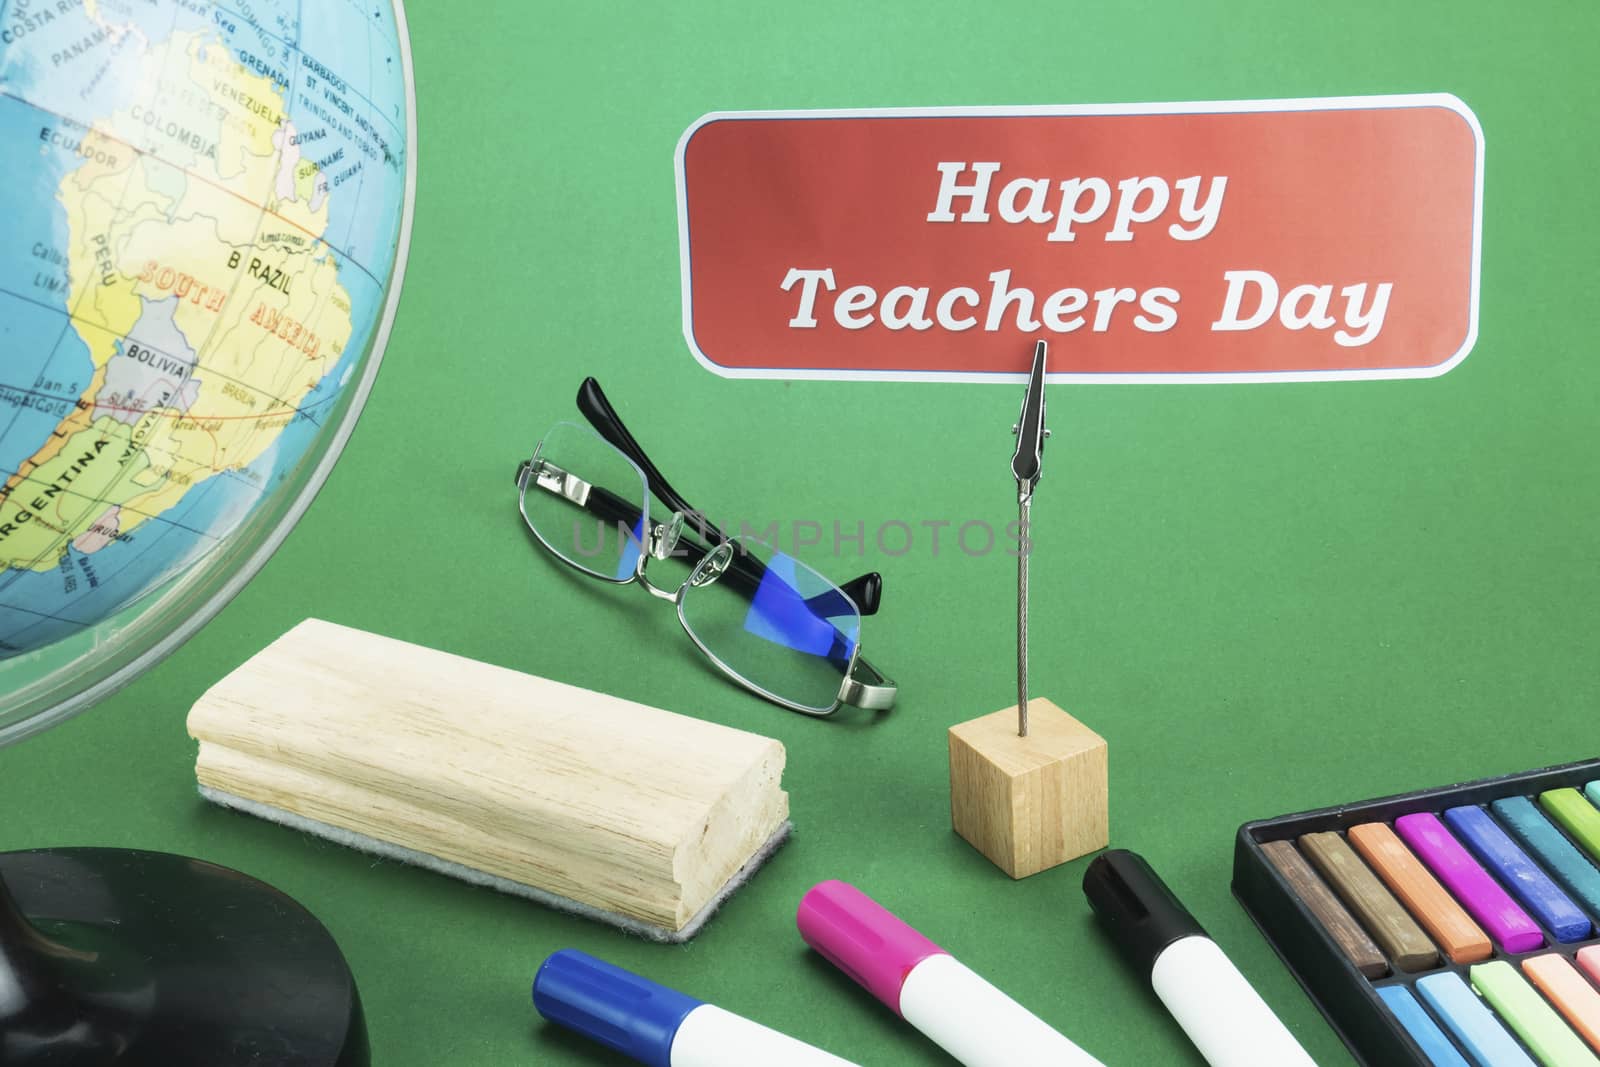 World Teachers' Day background - 5 October Unesco World Teachers's Day celebration concept by pairhandmade